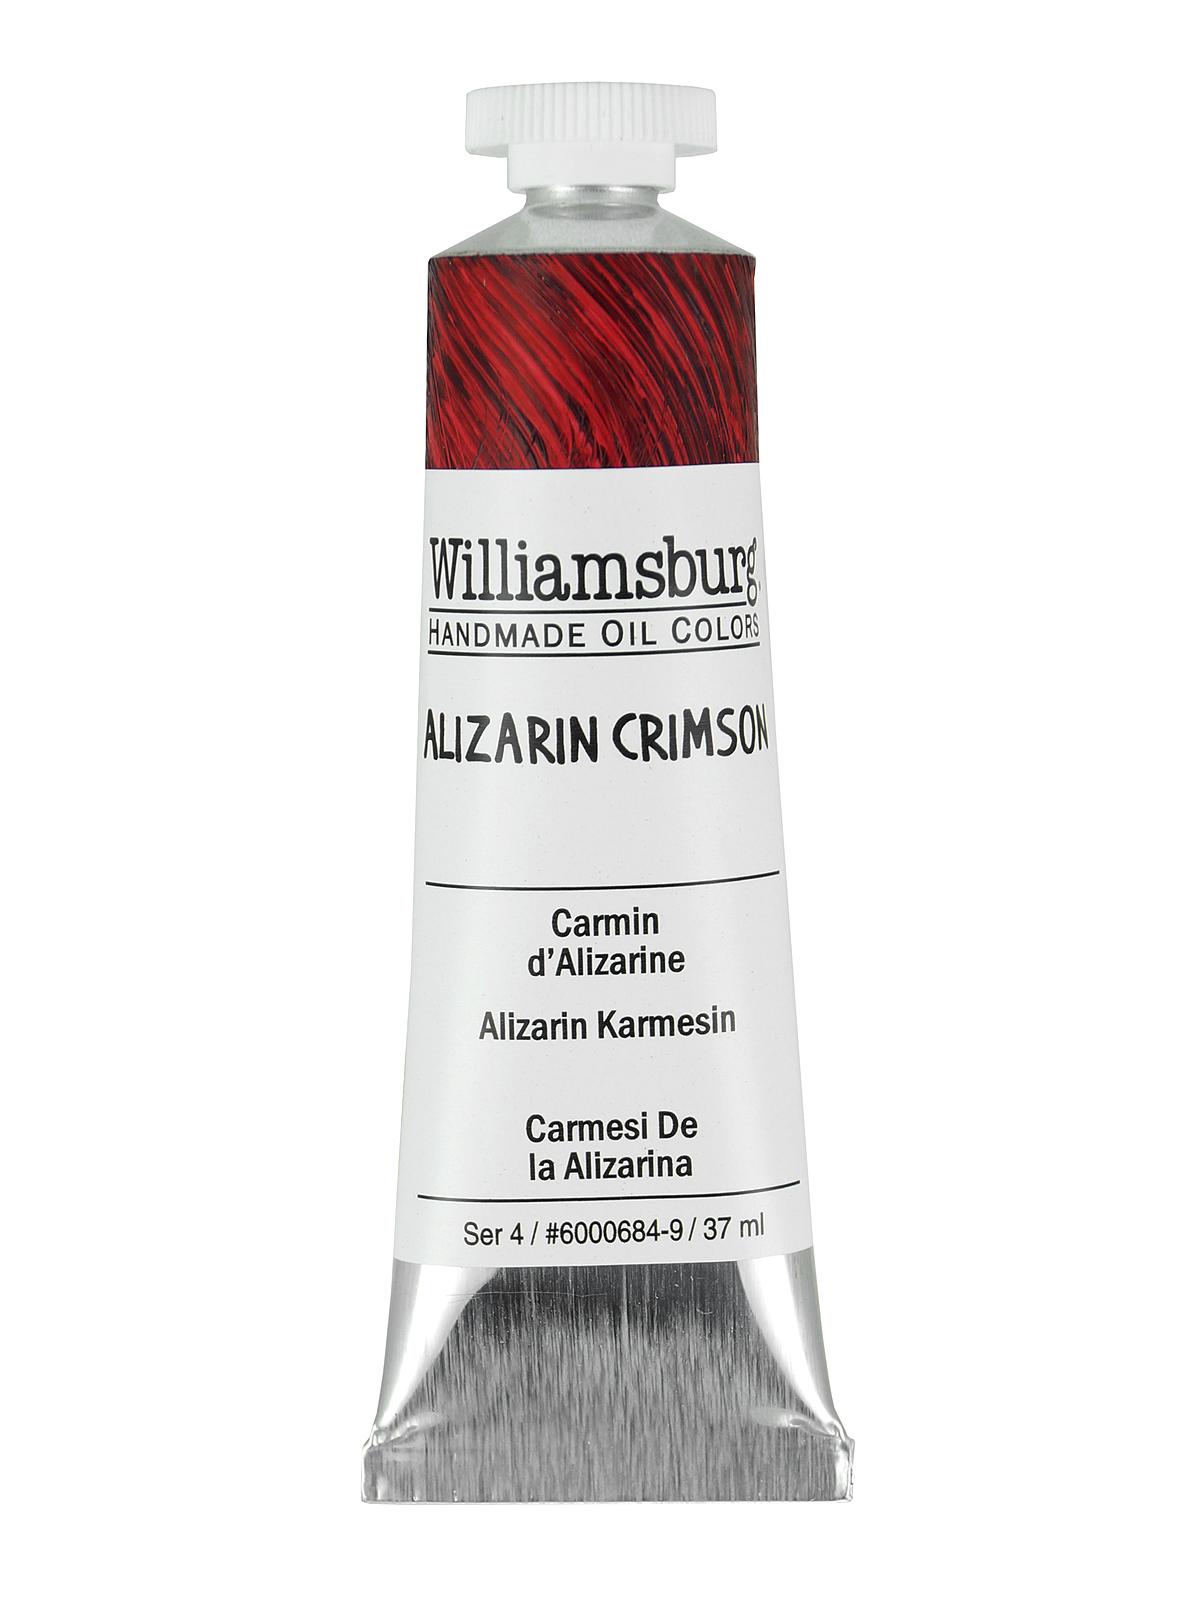 Handmade Oil Colors Alizarin Crimson 37 Ml